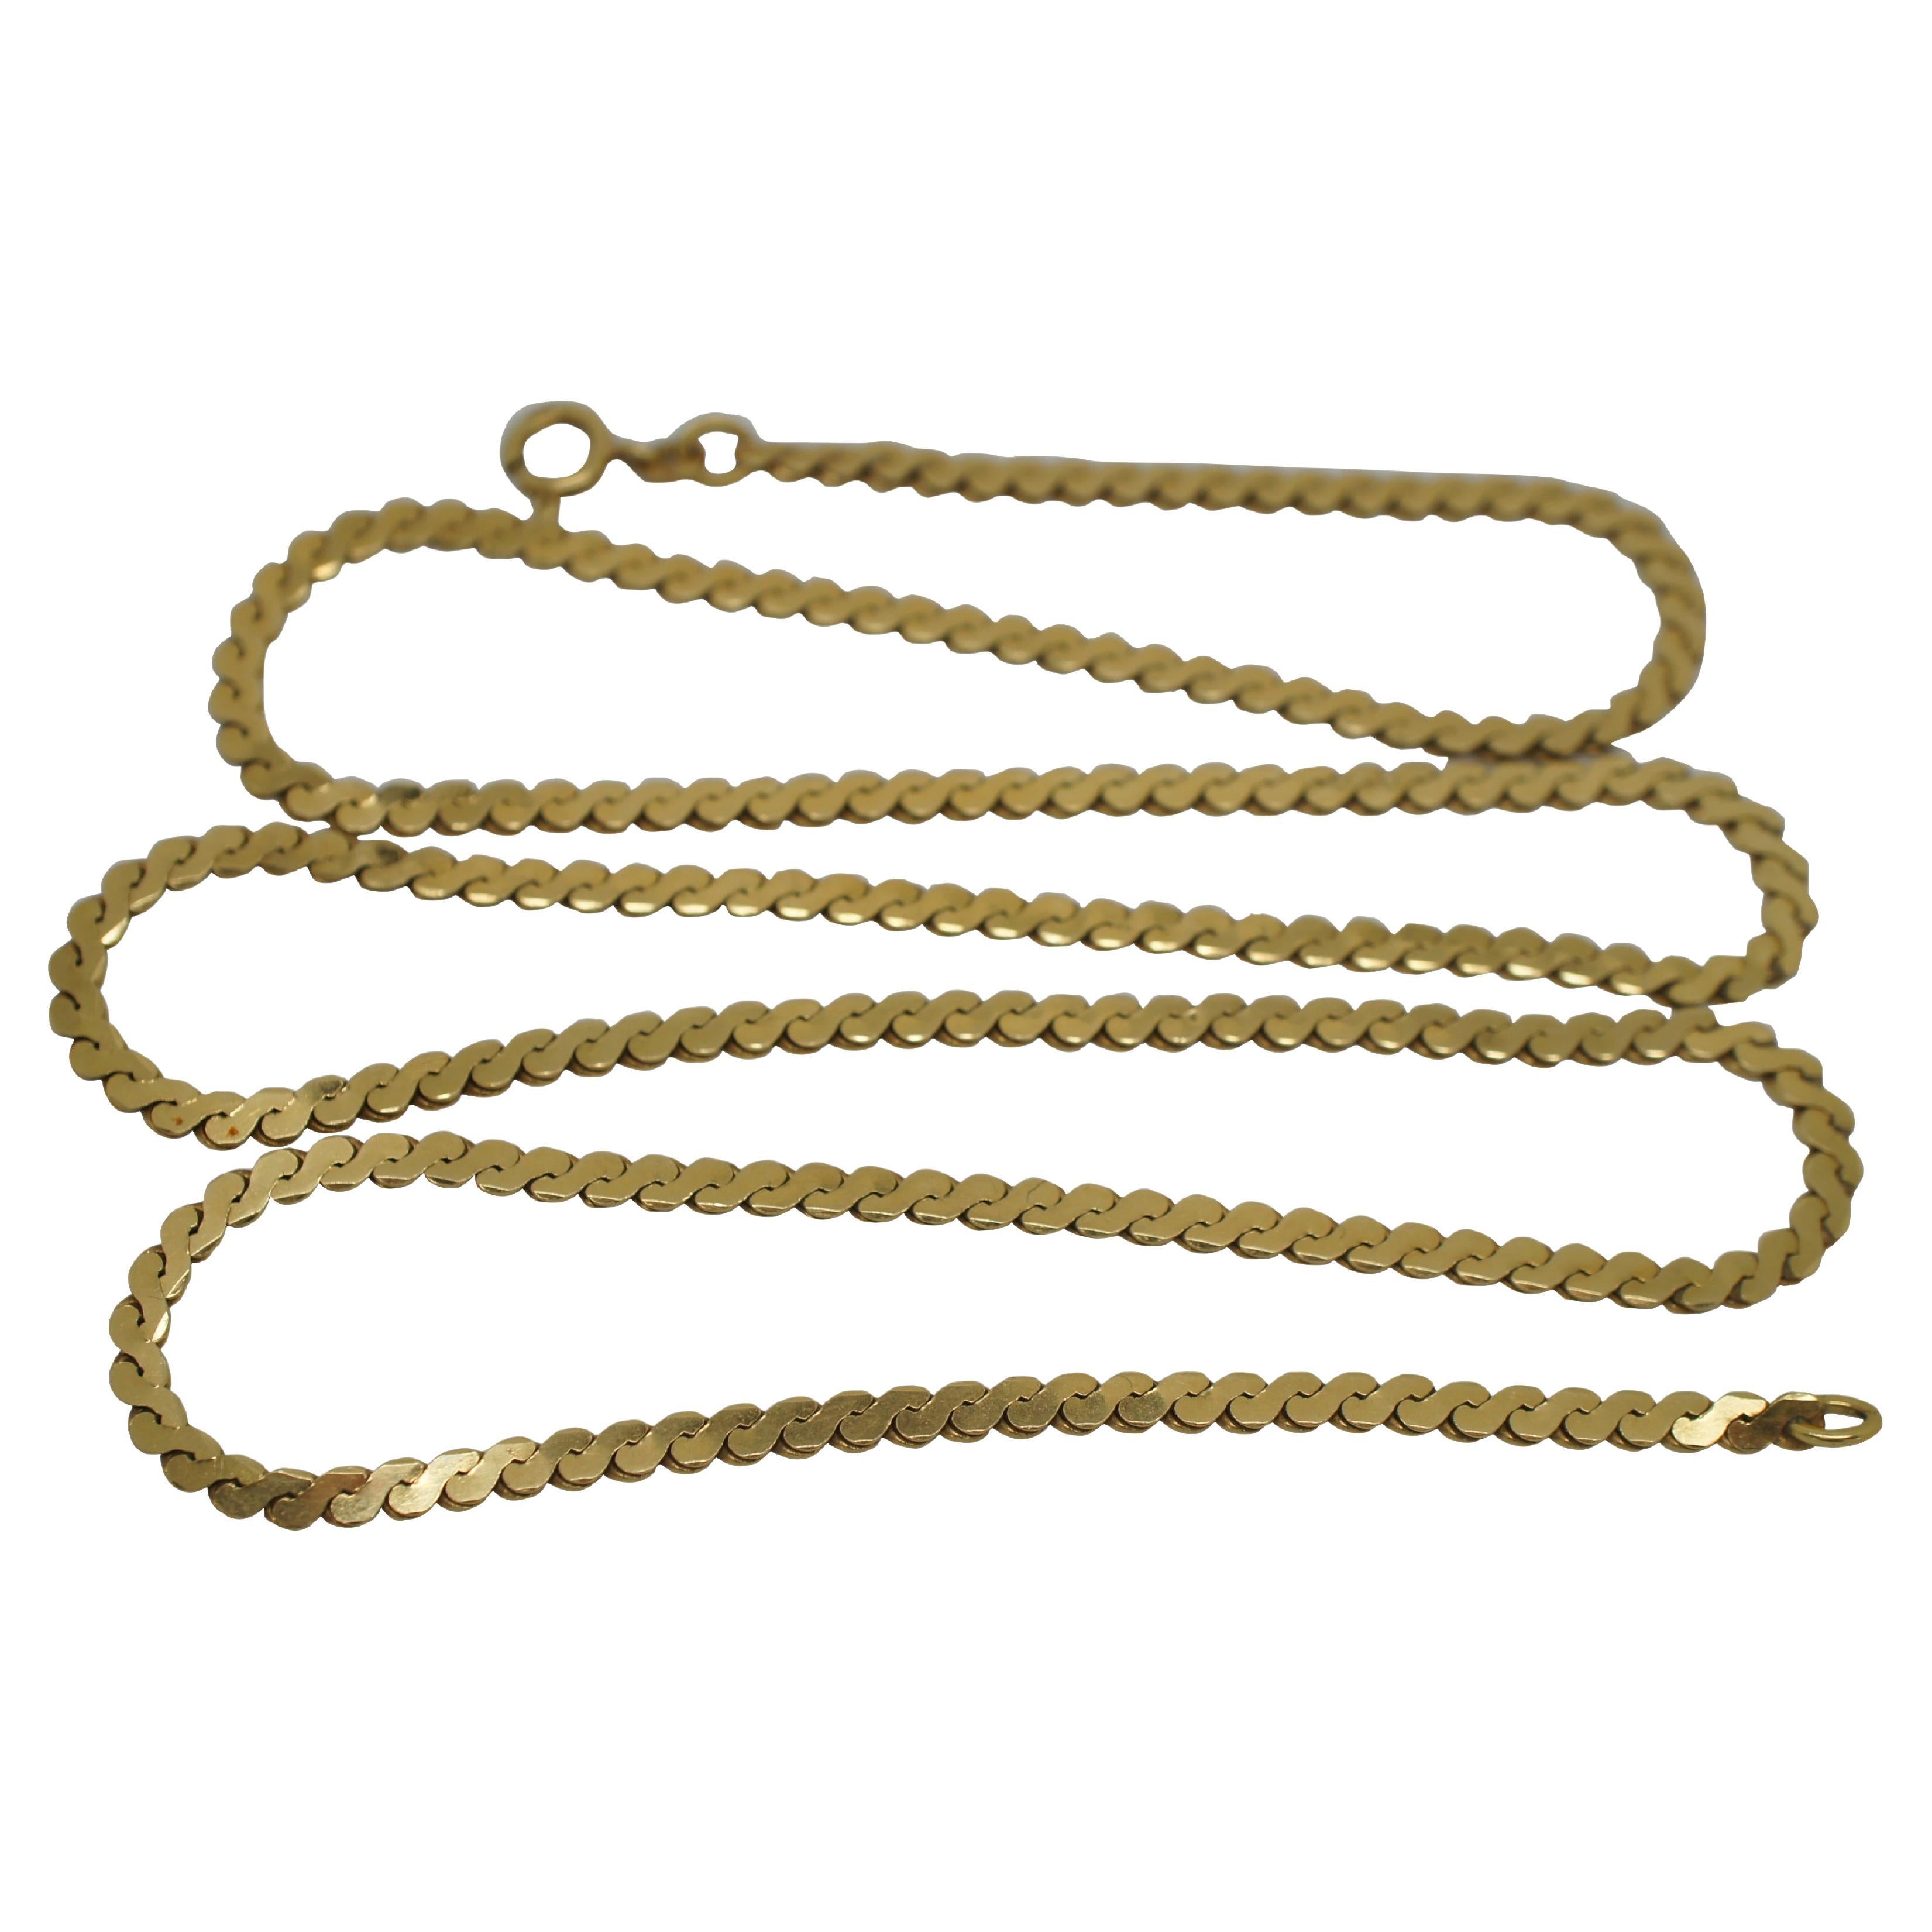 Balestra & Figli 18K Gold 3mm Flat Serpentine Chain Necklace Italy 25g 27"